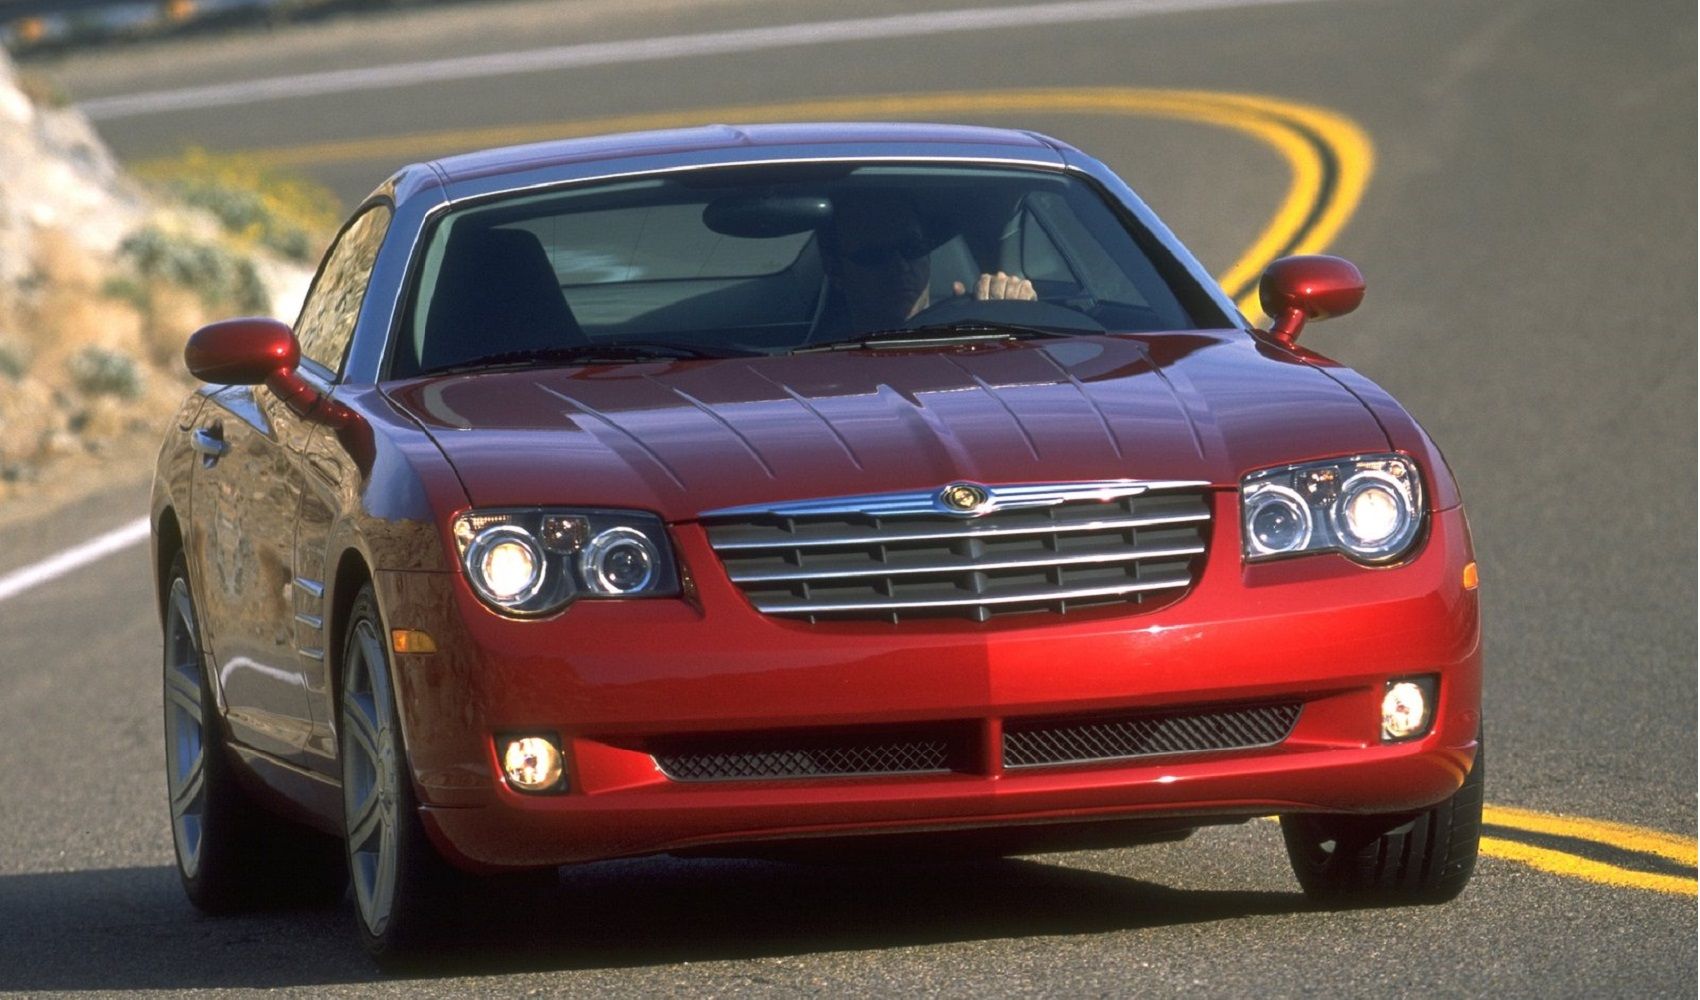 Chrysler Crossfire - Front